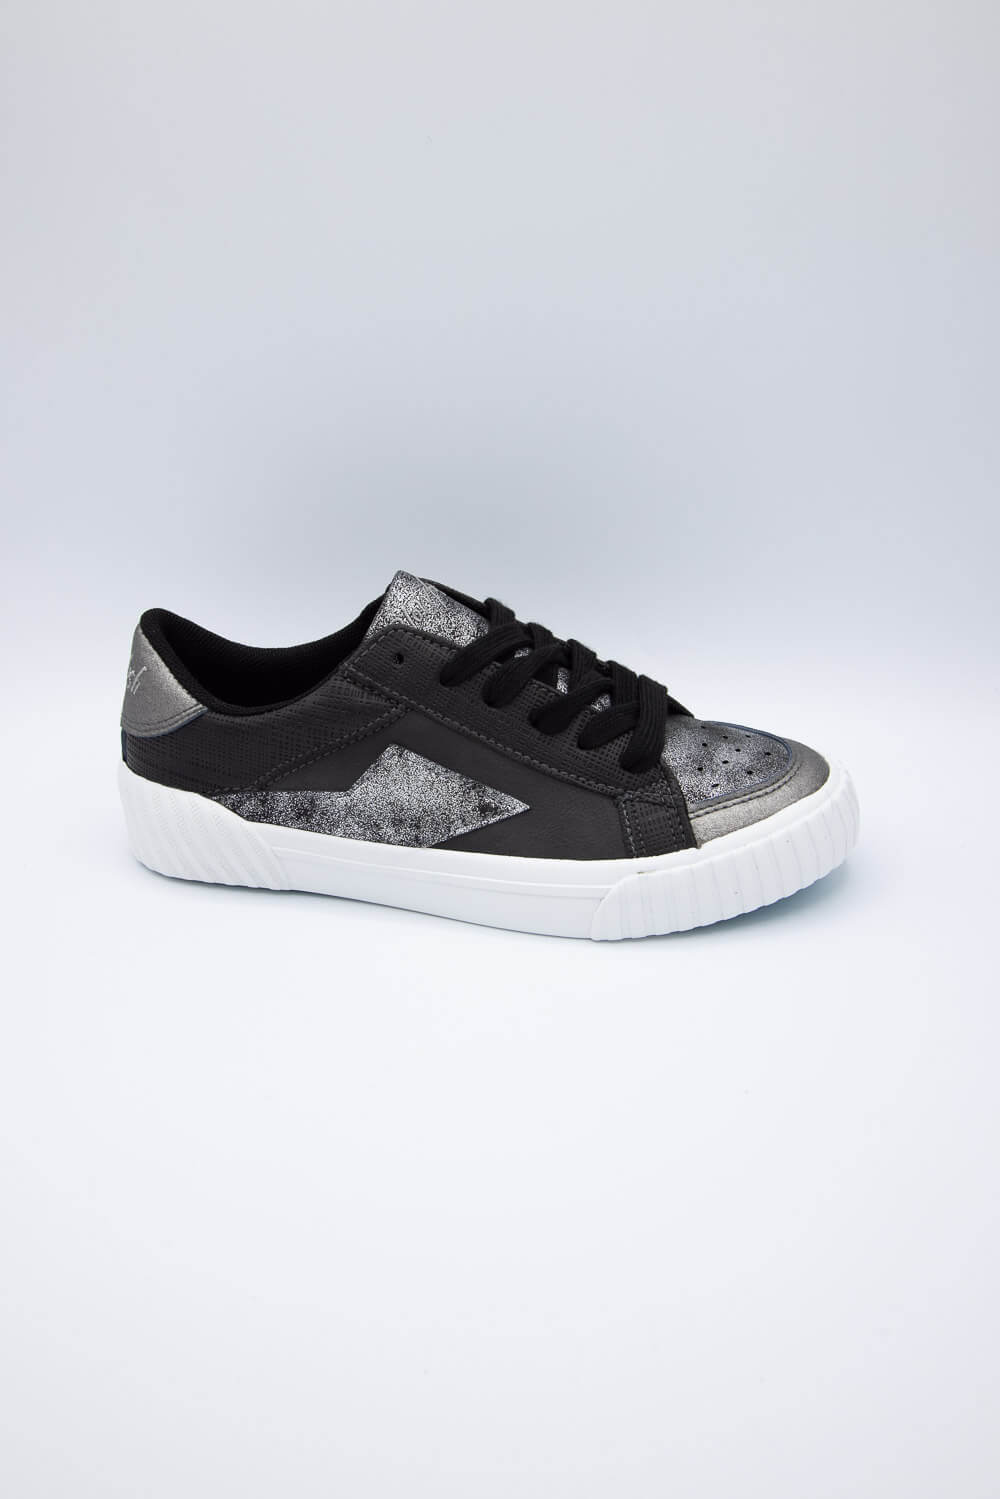 Blowfish Malibu Willa Sneakers for Women in Black | ZS-1365-079 – Glik's